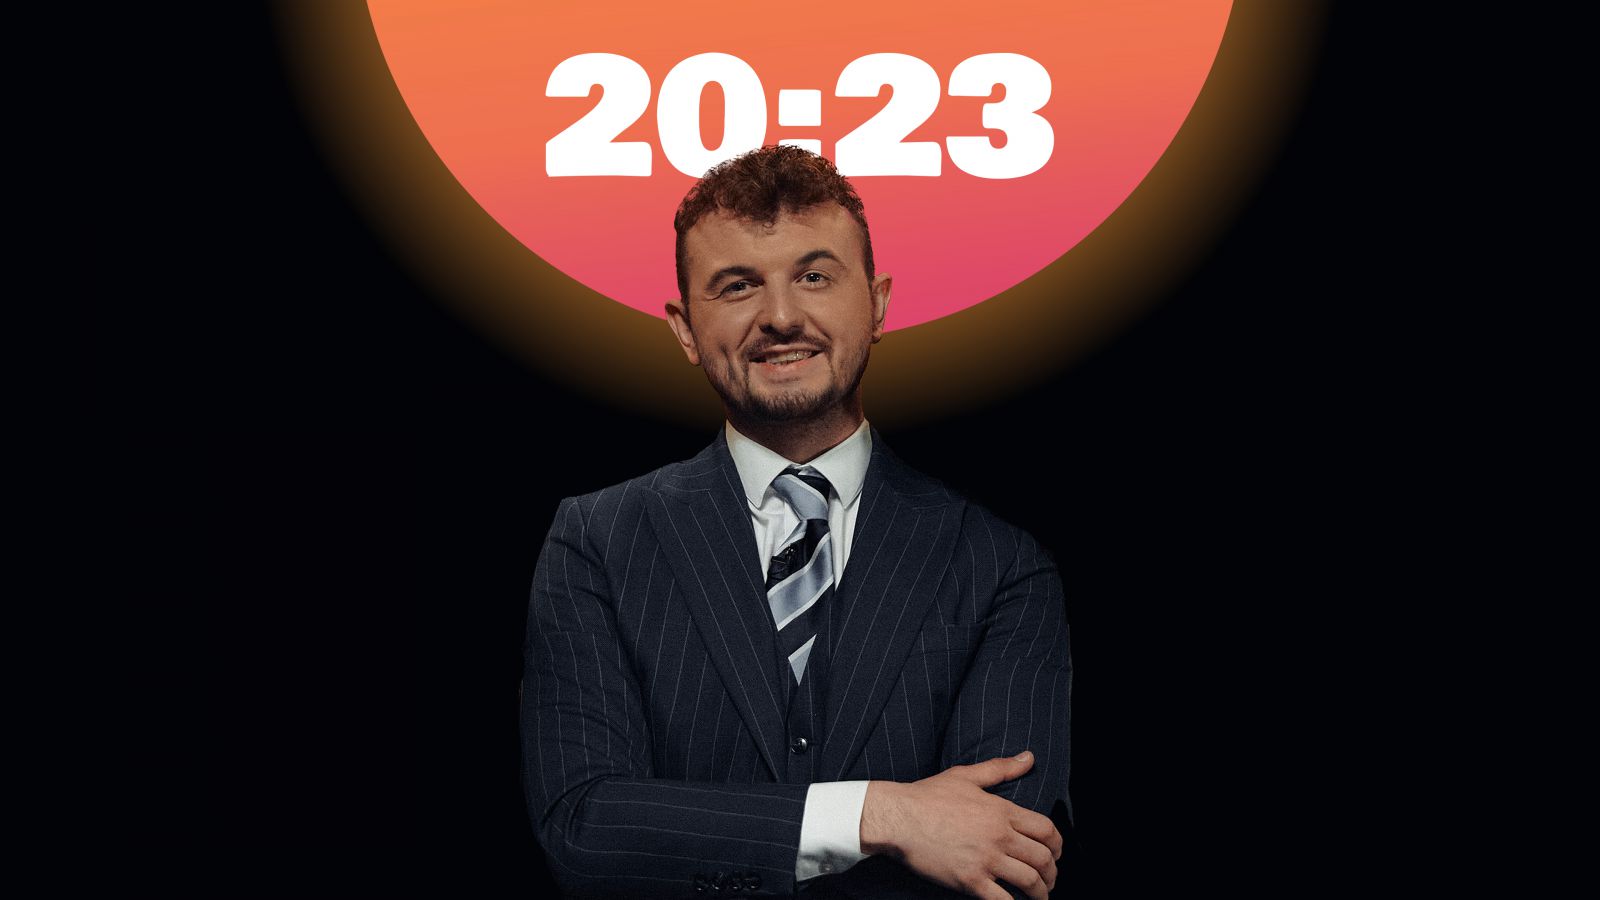 20:23 with Zhenya Yanovich - 8.10 at 16:00